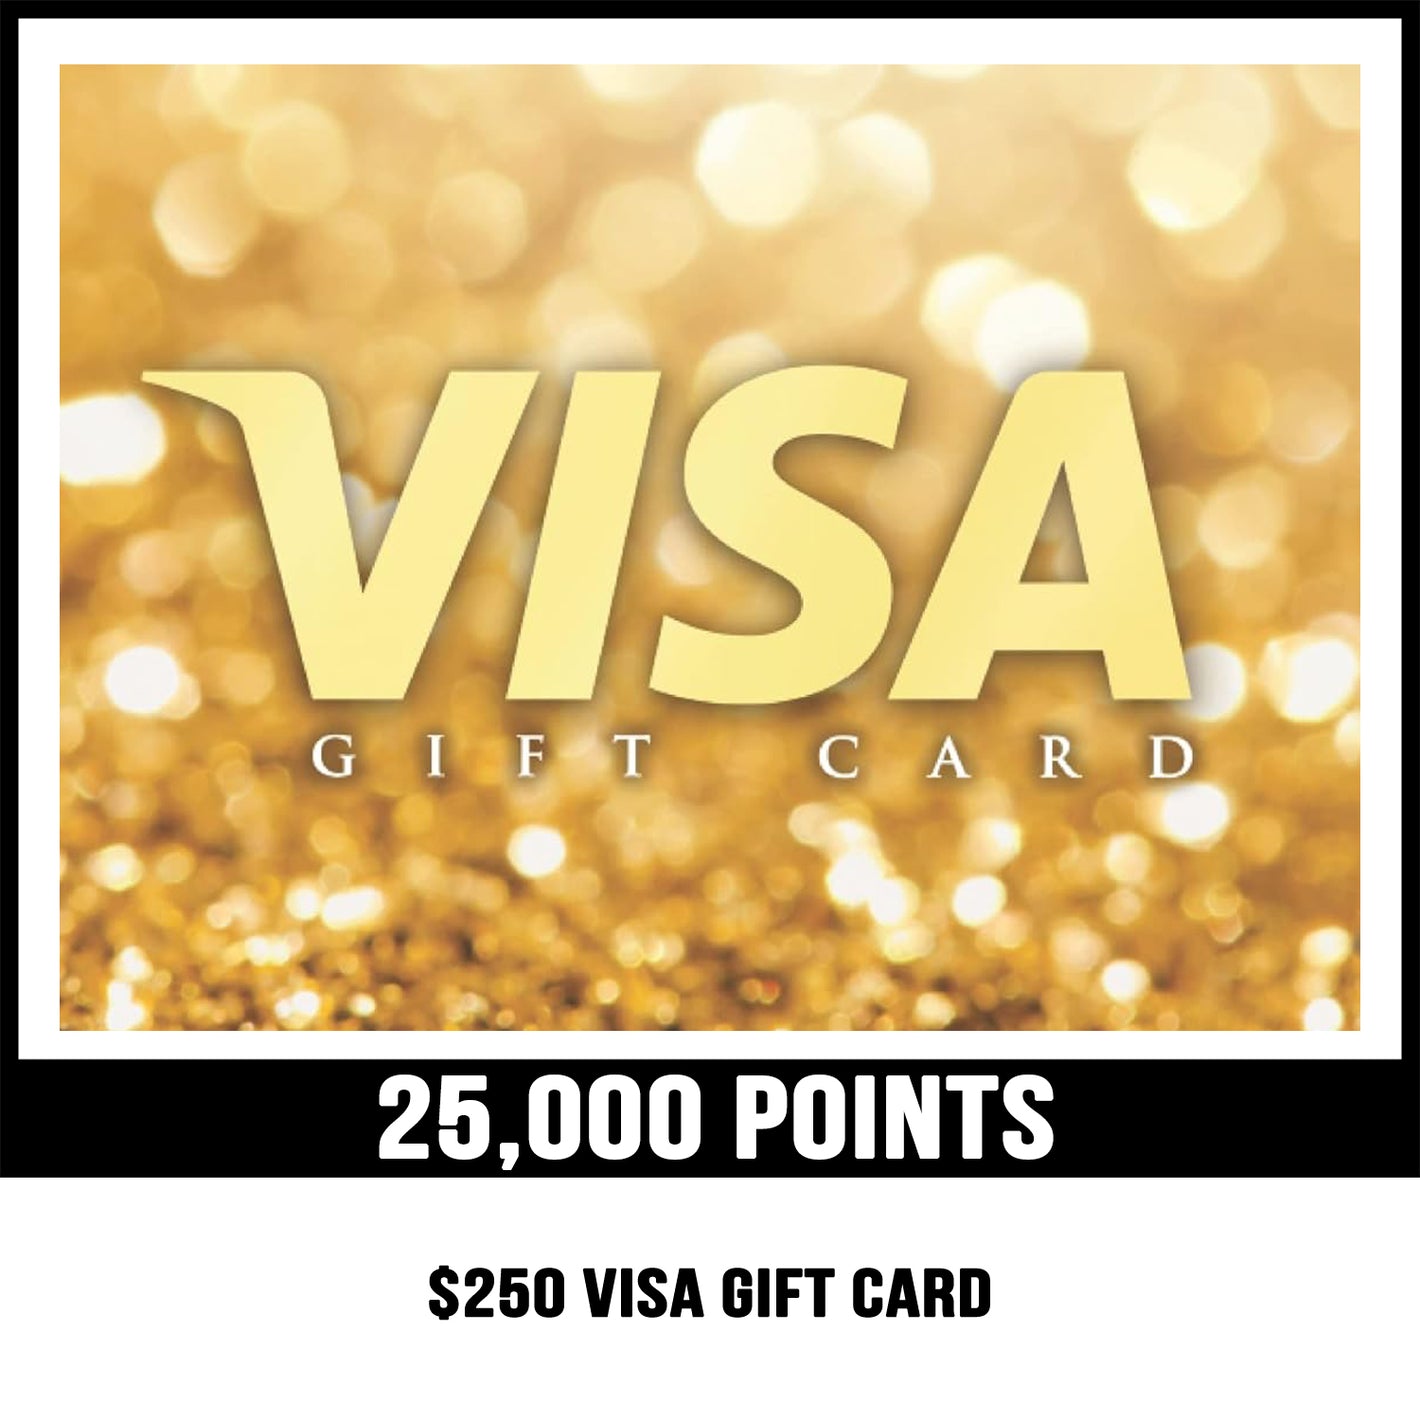 $250 Visa gift card prize for 25000 points